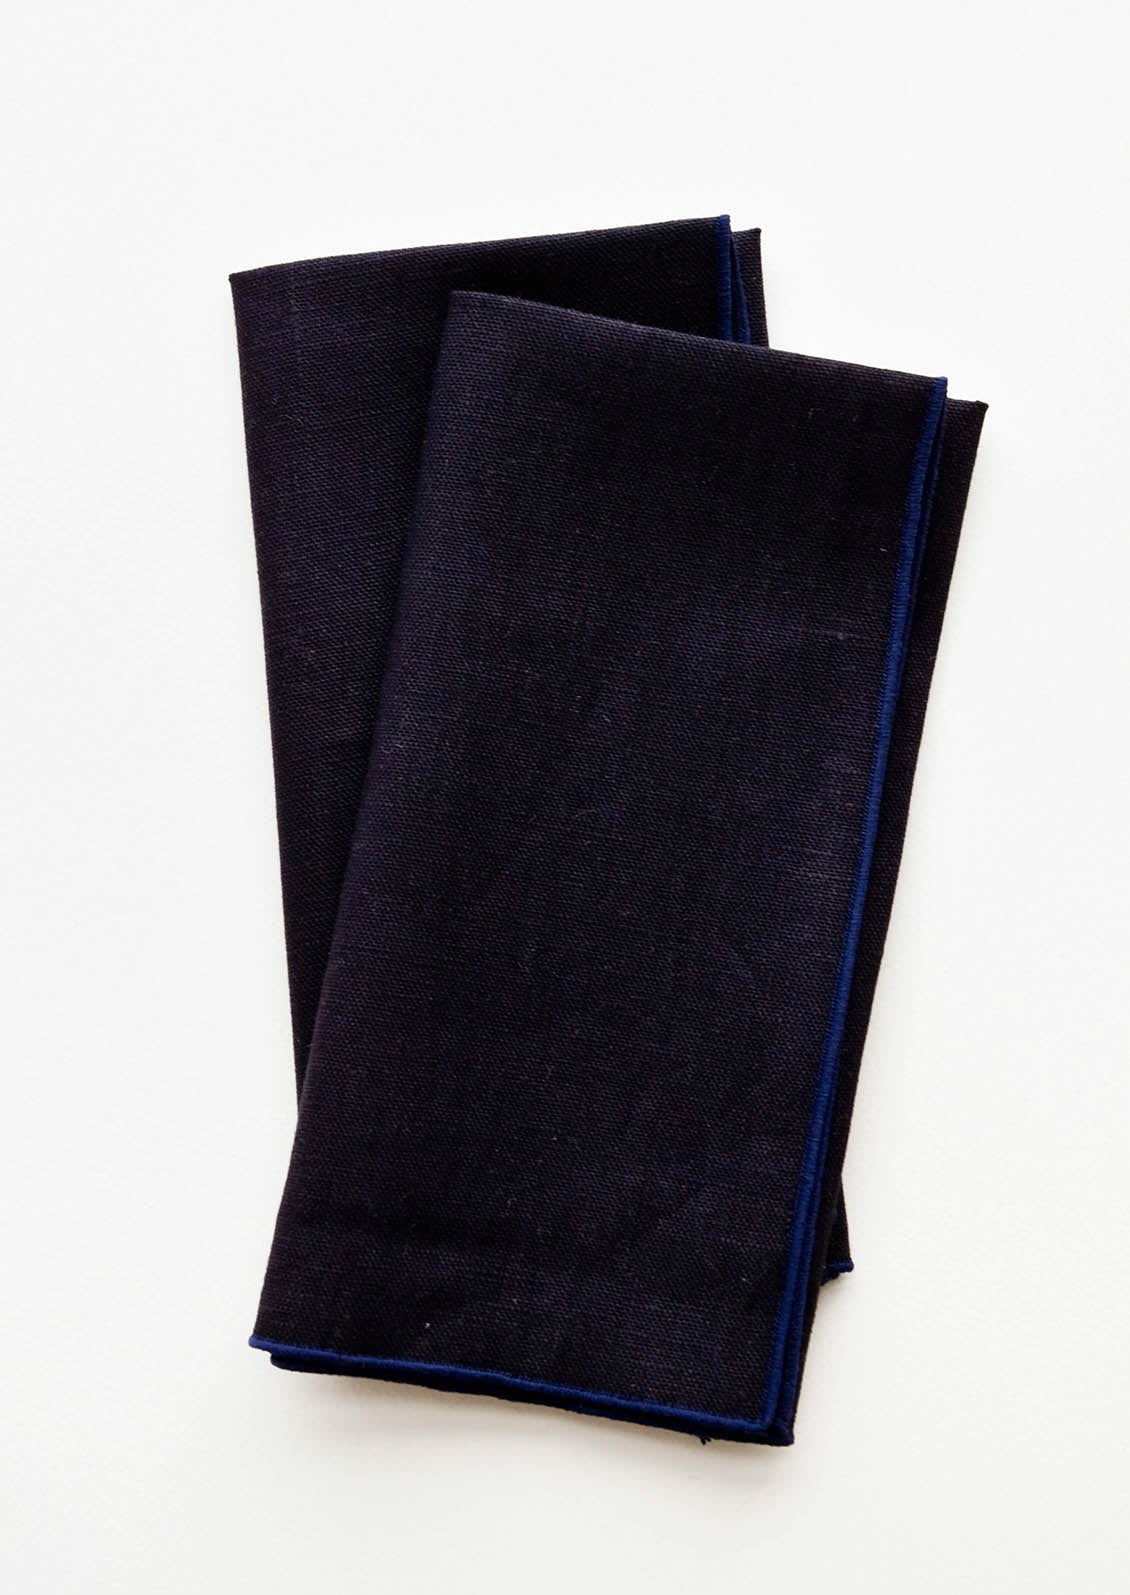 Pair of folded Linen Napkins in Navy Blue.